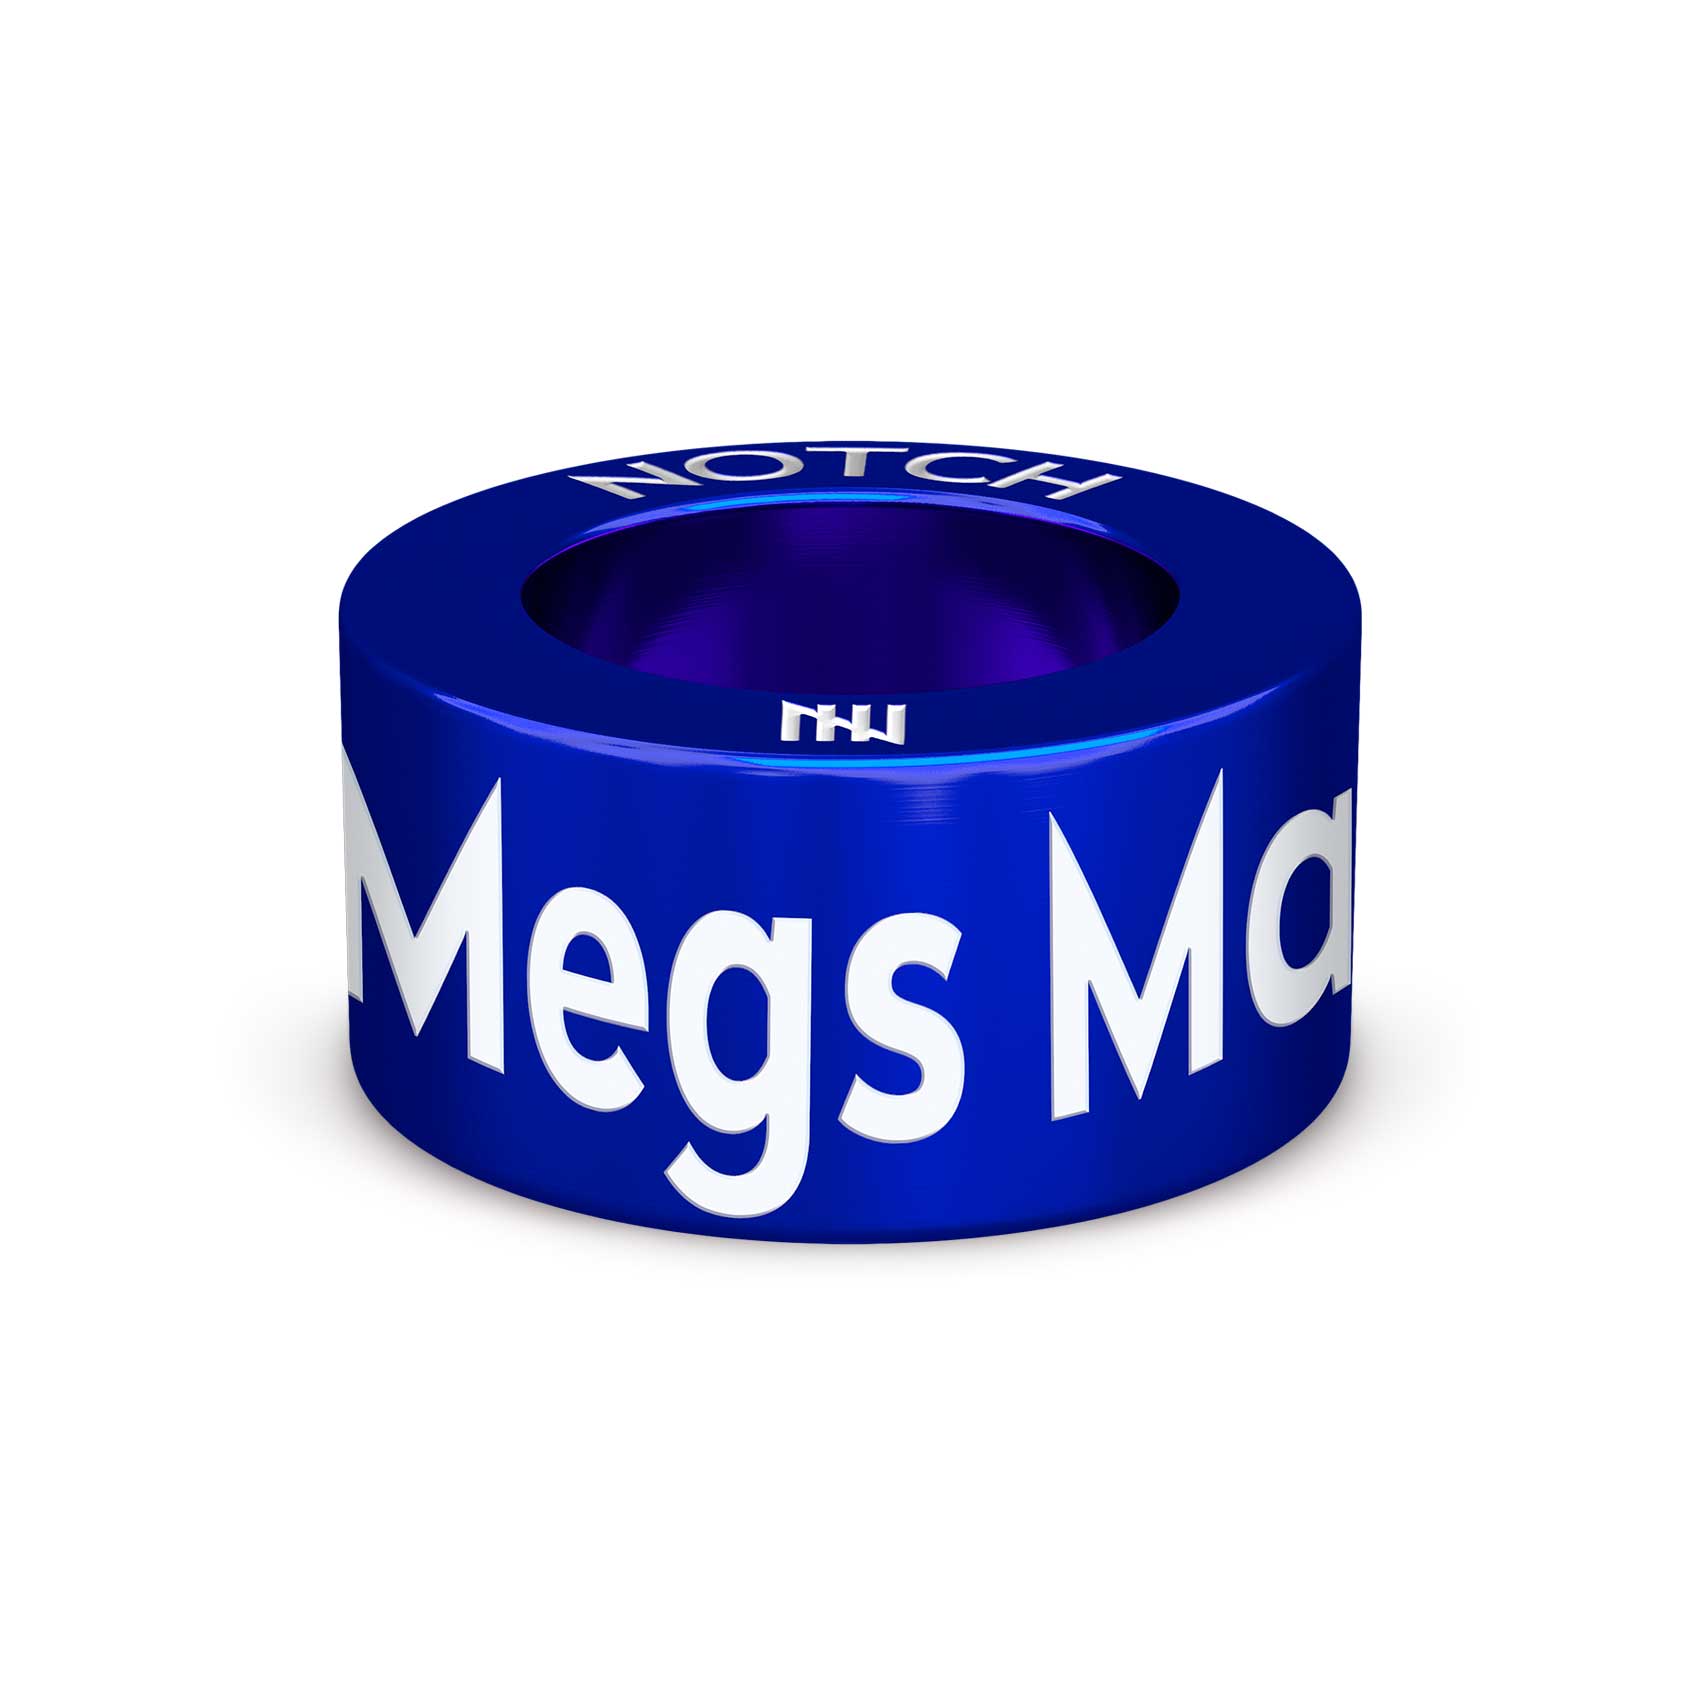 Megs Master NOTCH Charm